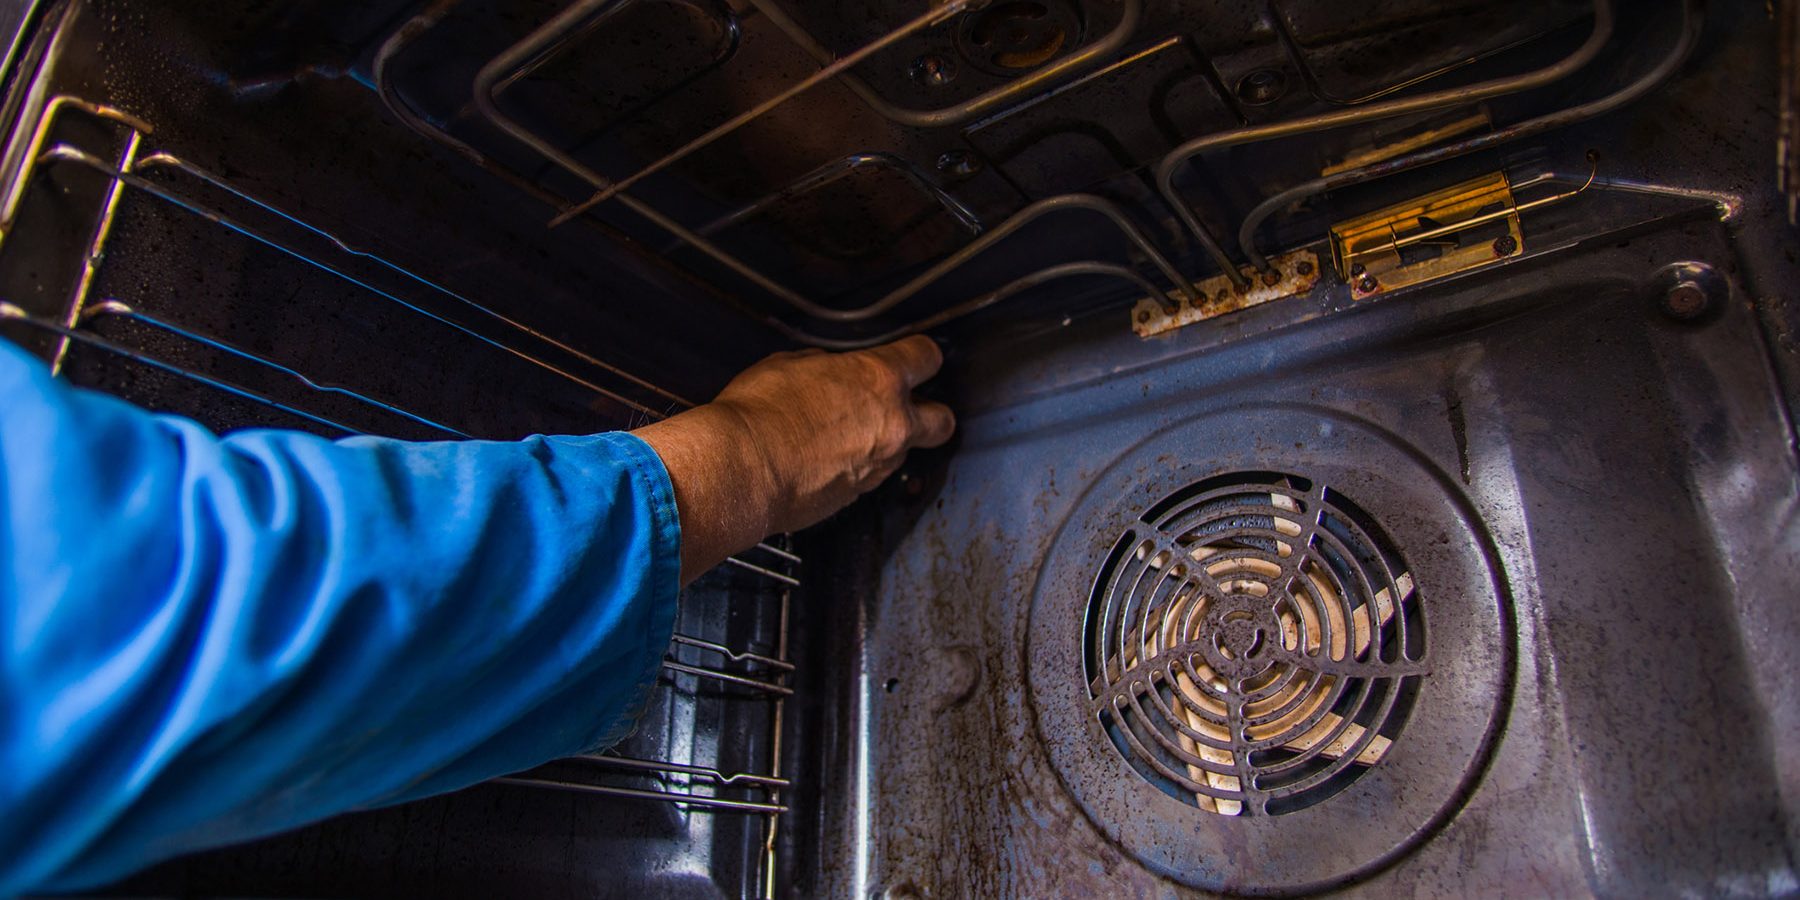 Repairman fixing the motor fan inside in the oven